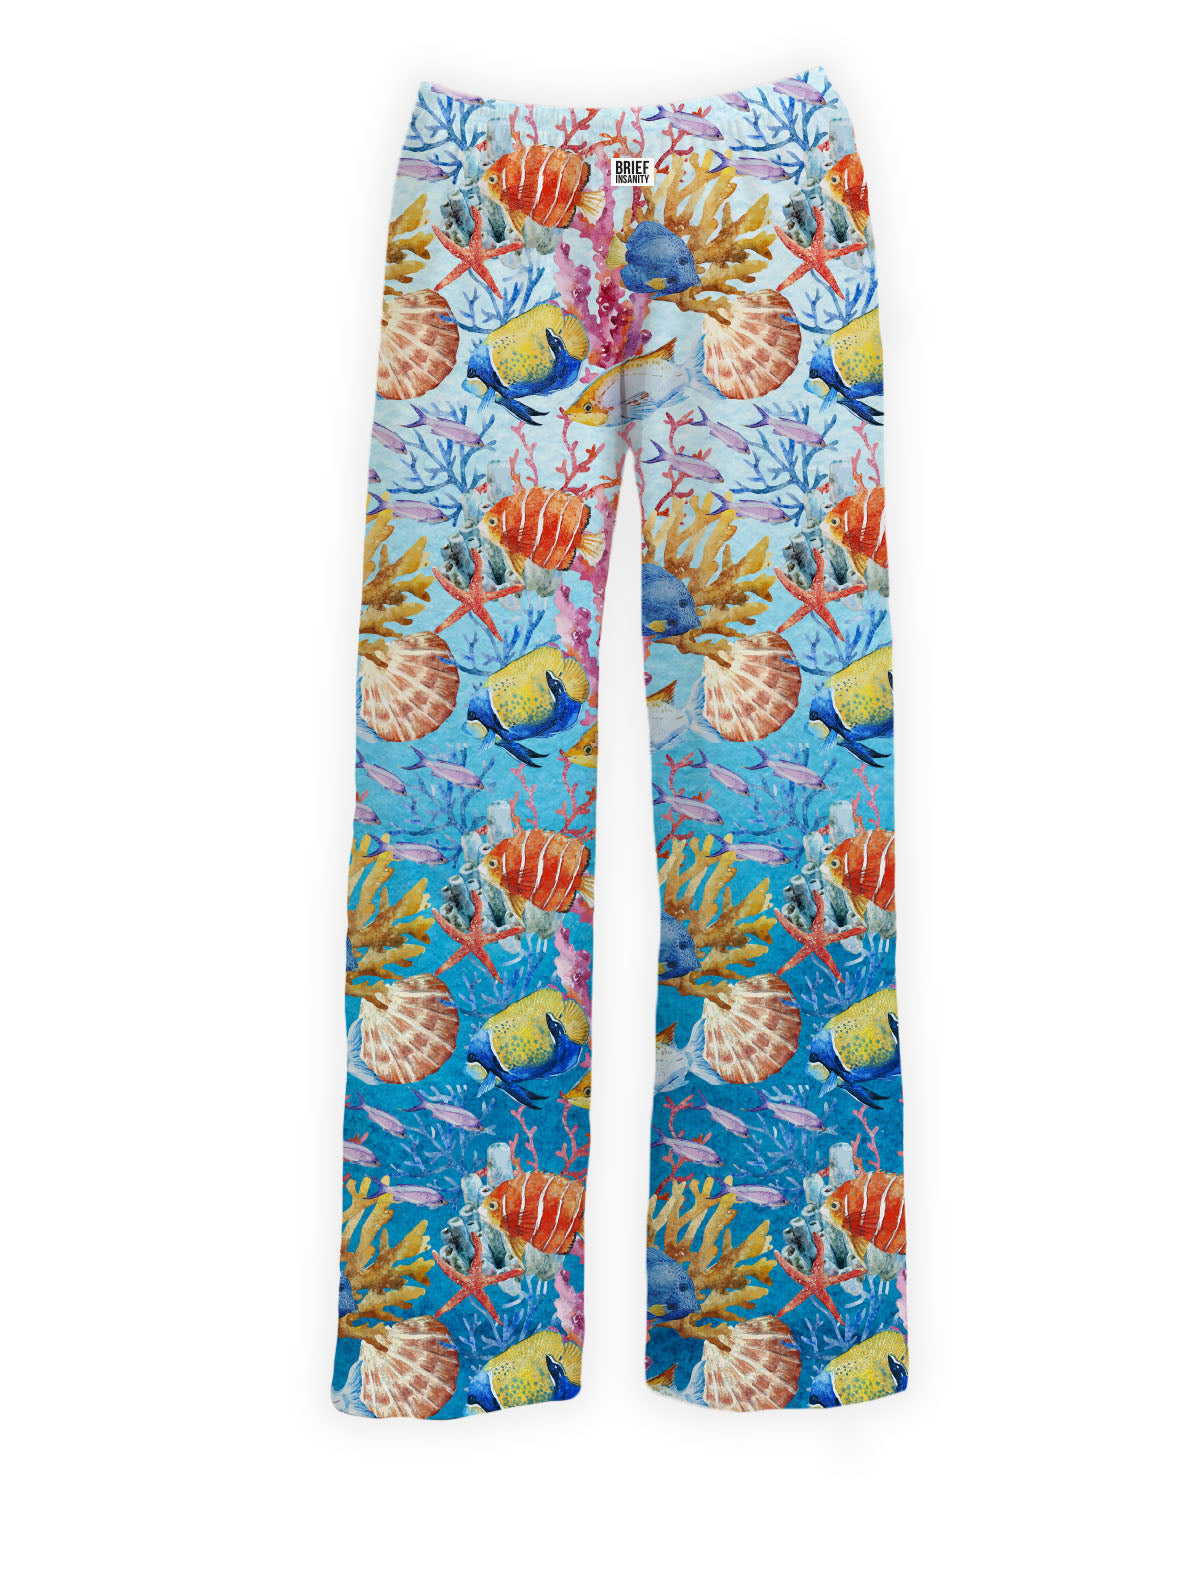 BRIEF INSANITY Tropical Fish Pattern Pajama Lounge Pants